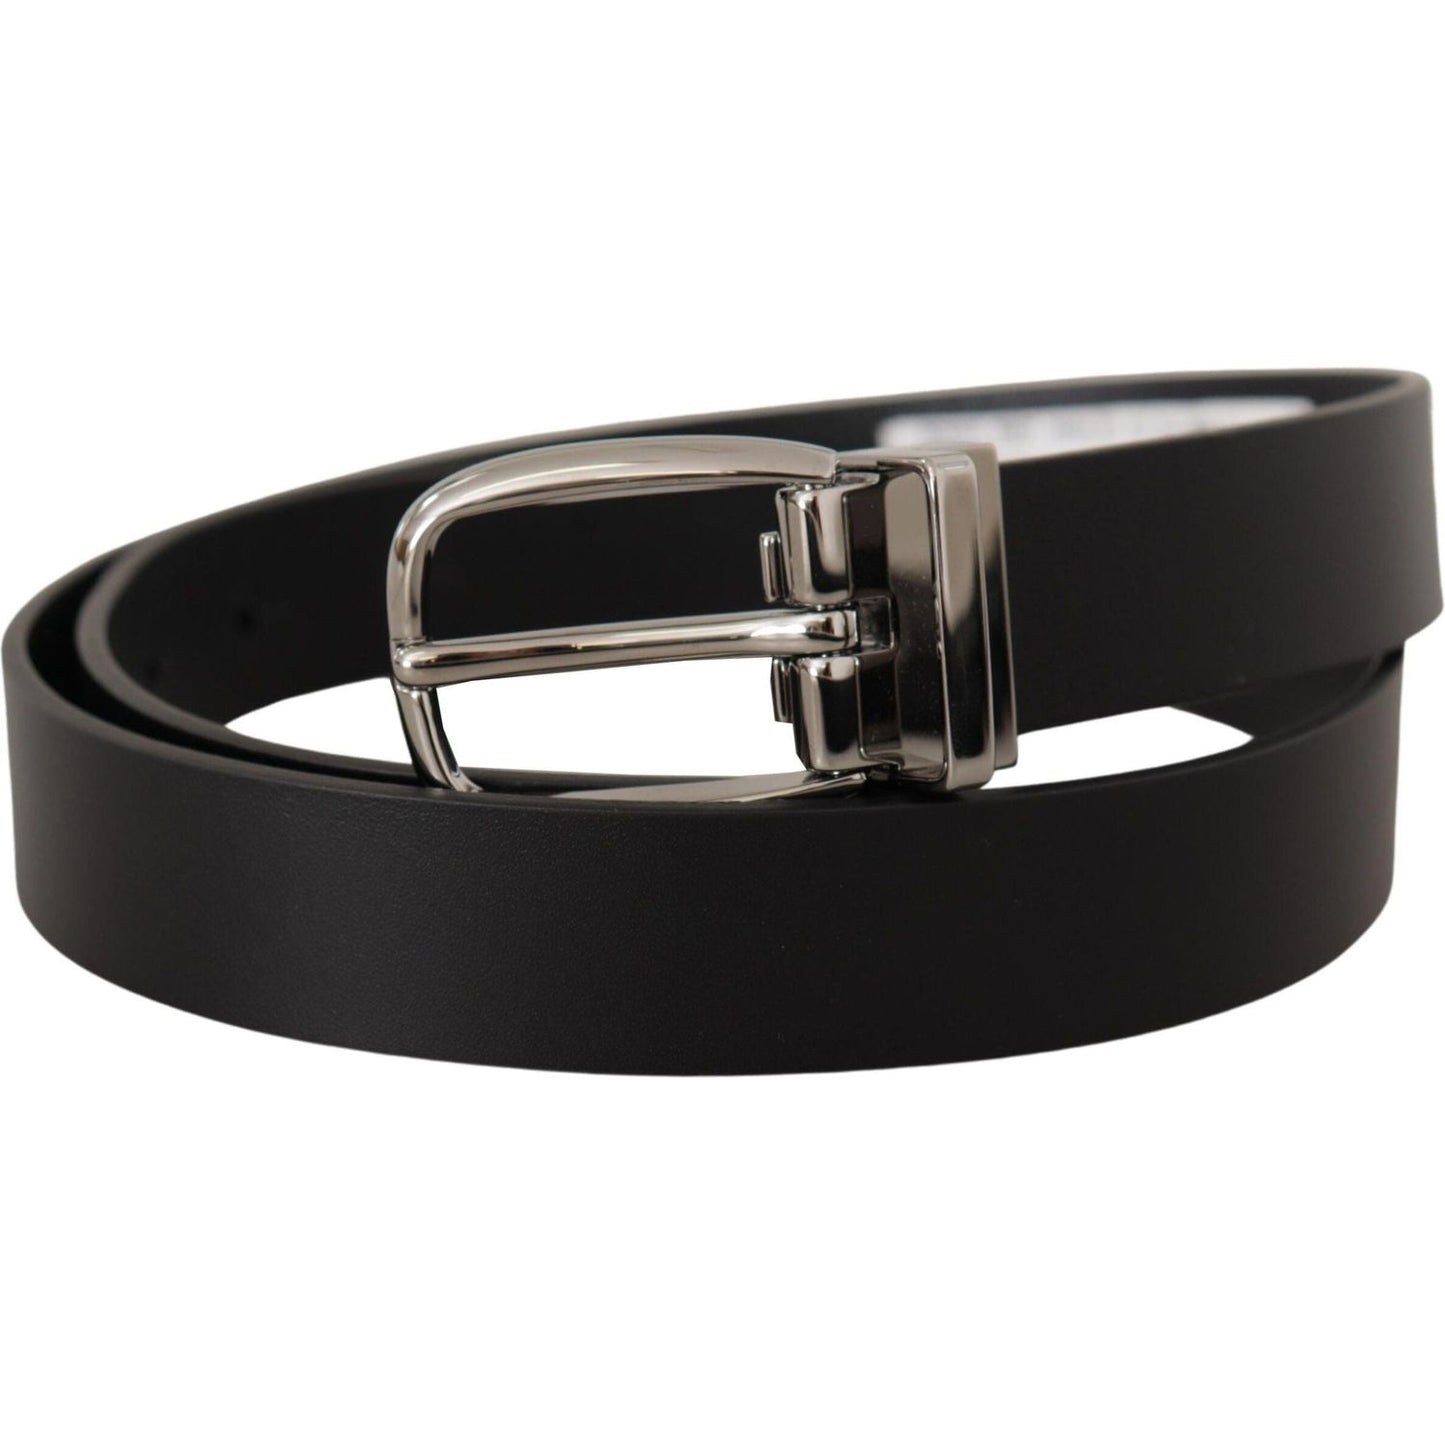 Elegant Black Leather Belt with Silver Tone Buckle